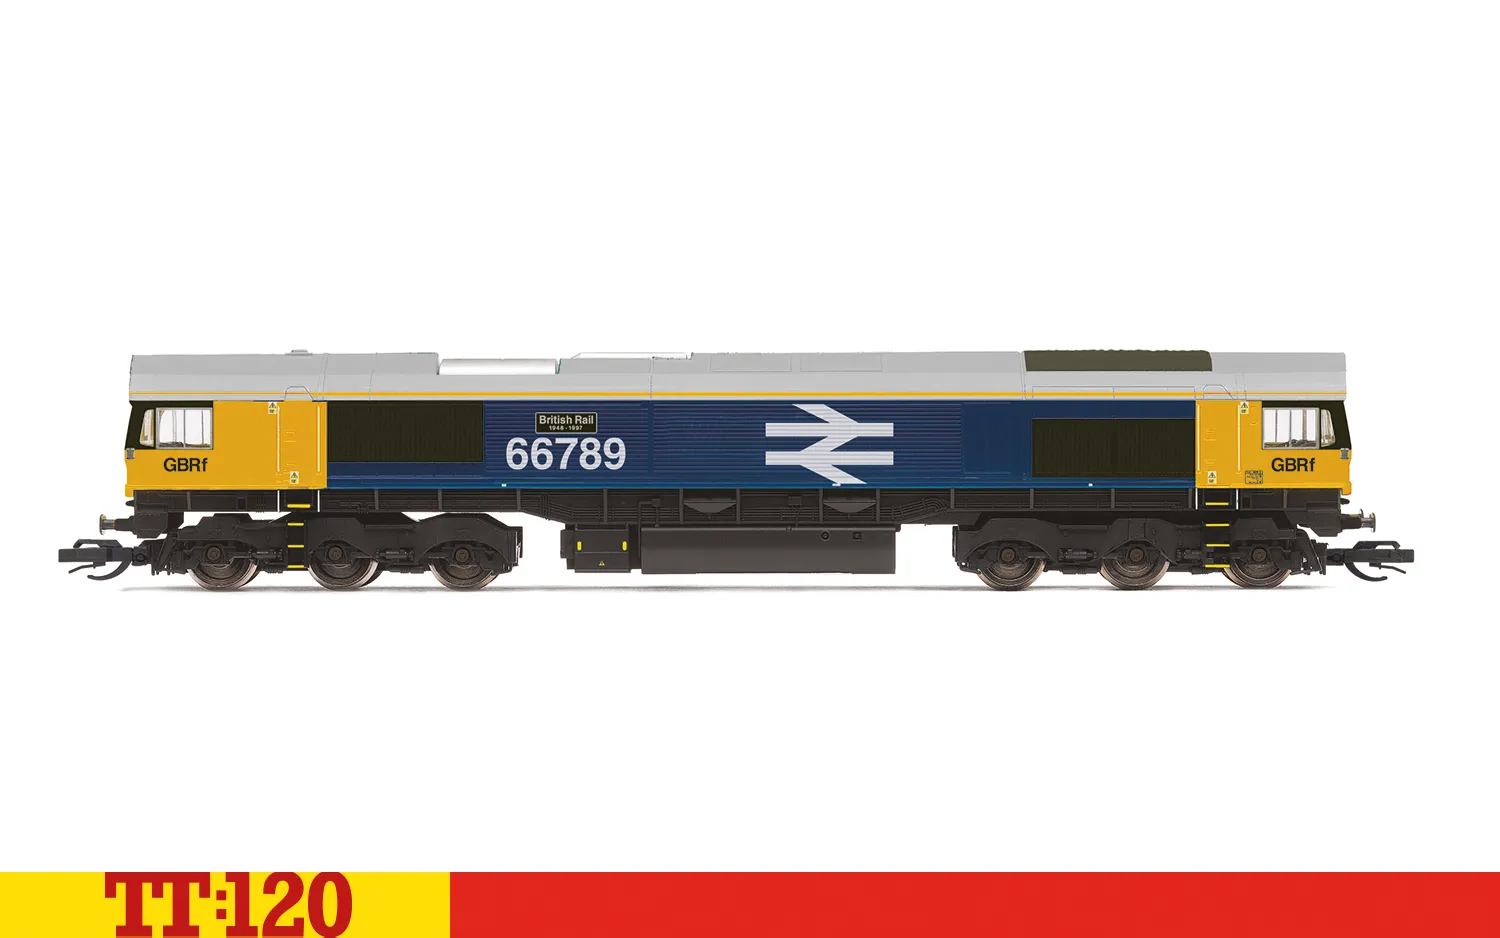 GBRf, Class 66, Co-Co, 66789, 'British Rail 1948-1997'- Era 11